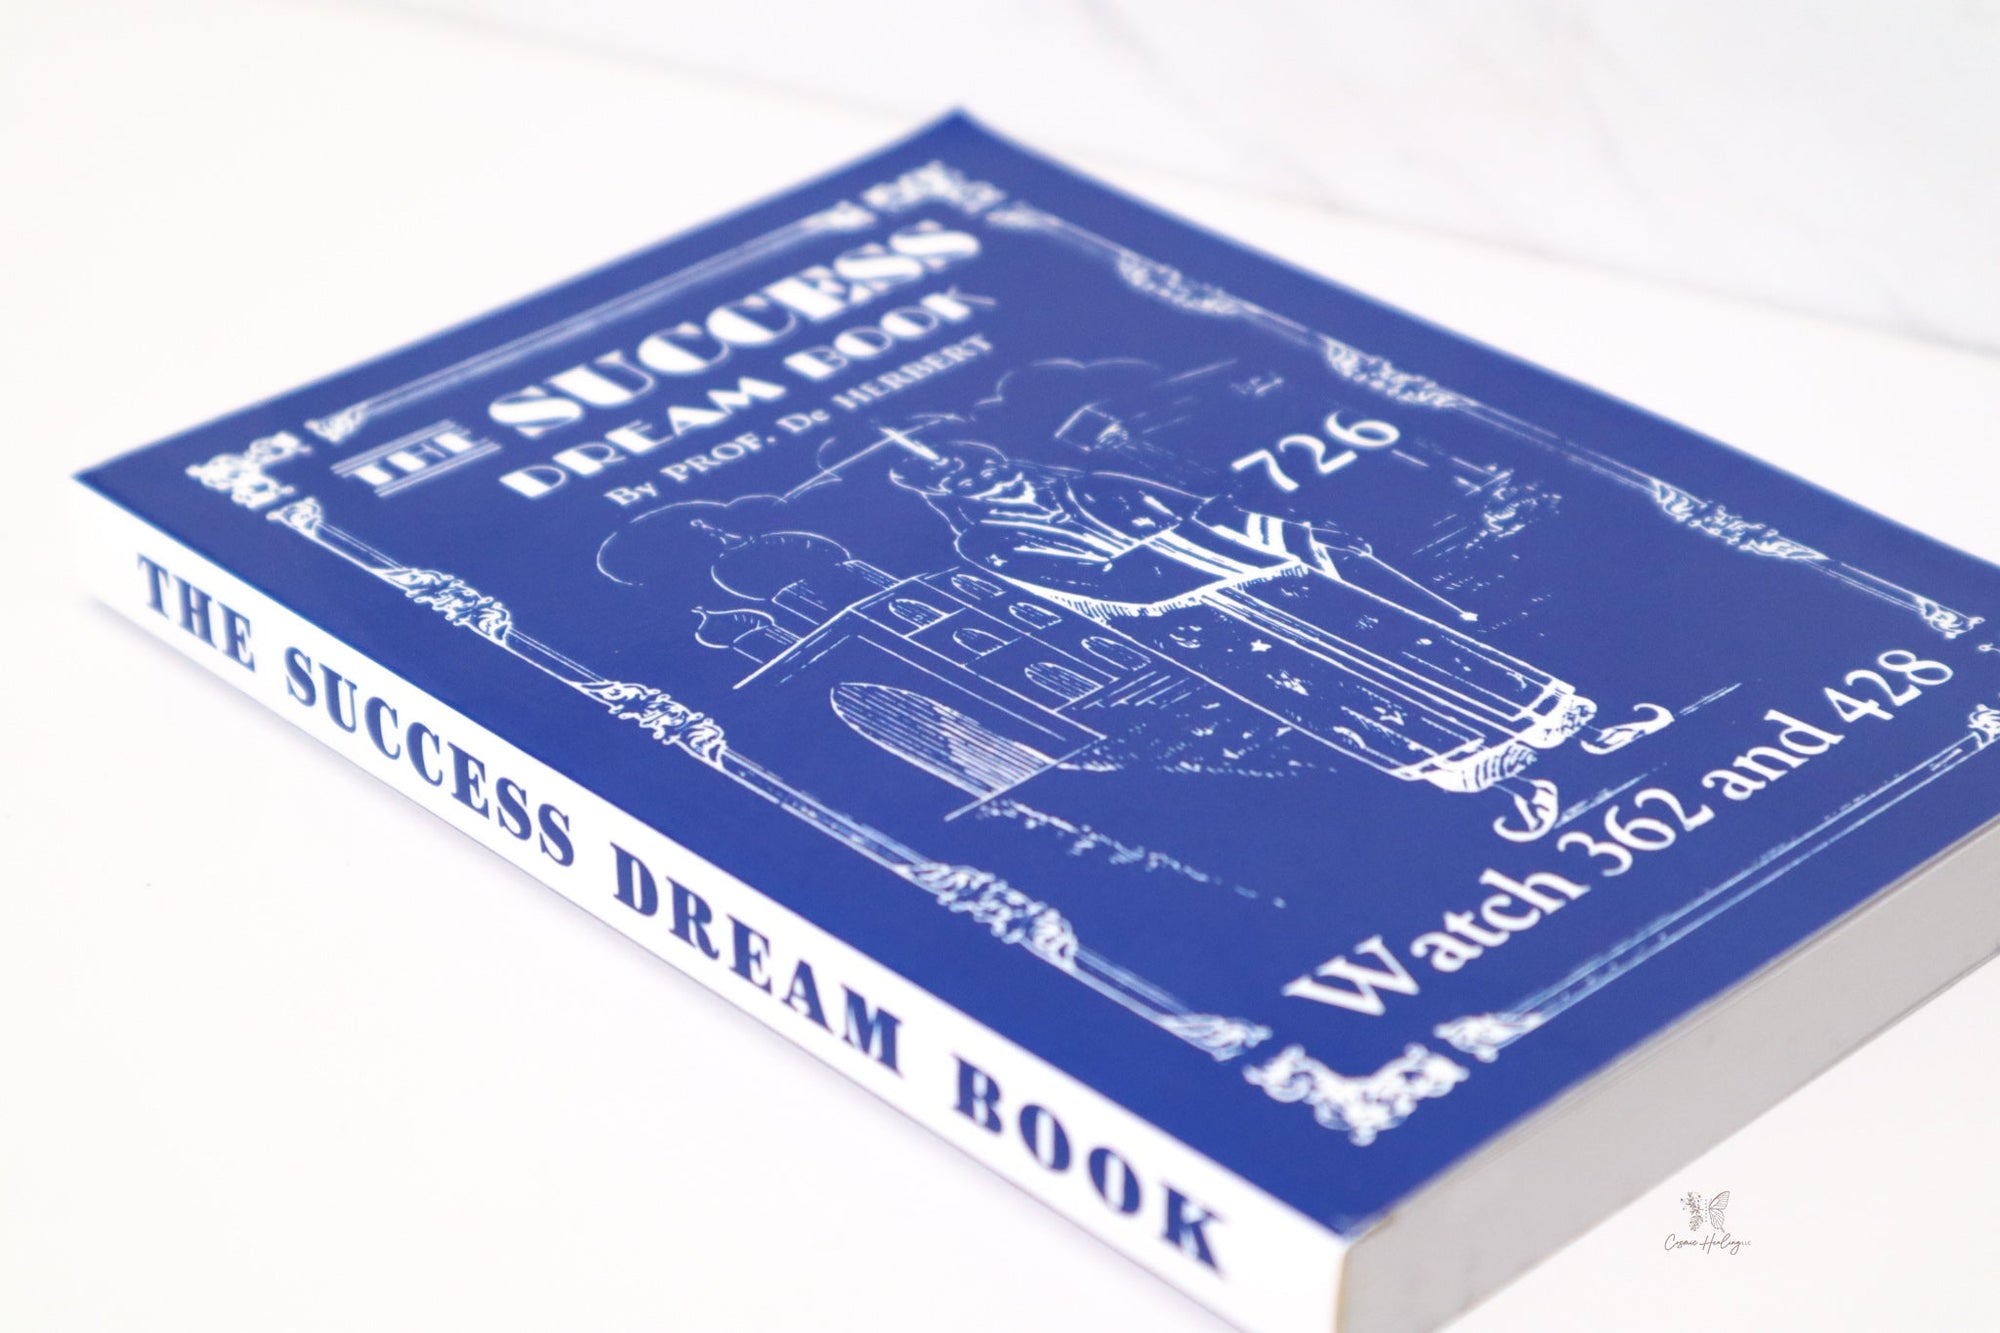 Success Dream Book by Prof. De Herbert - Shop Cosmic Healing